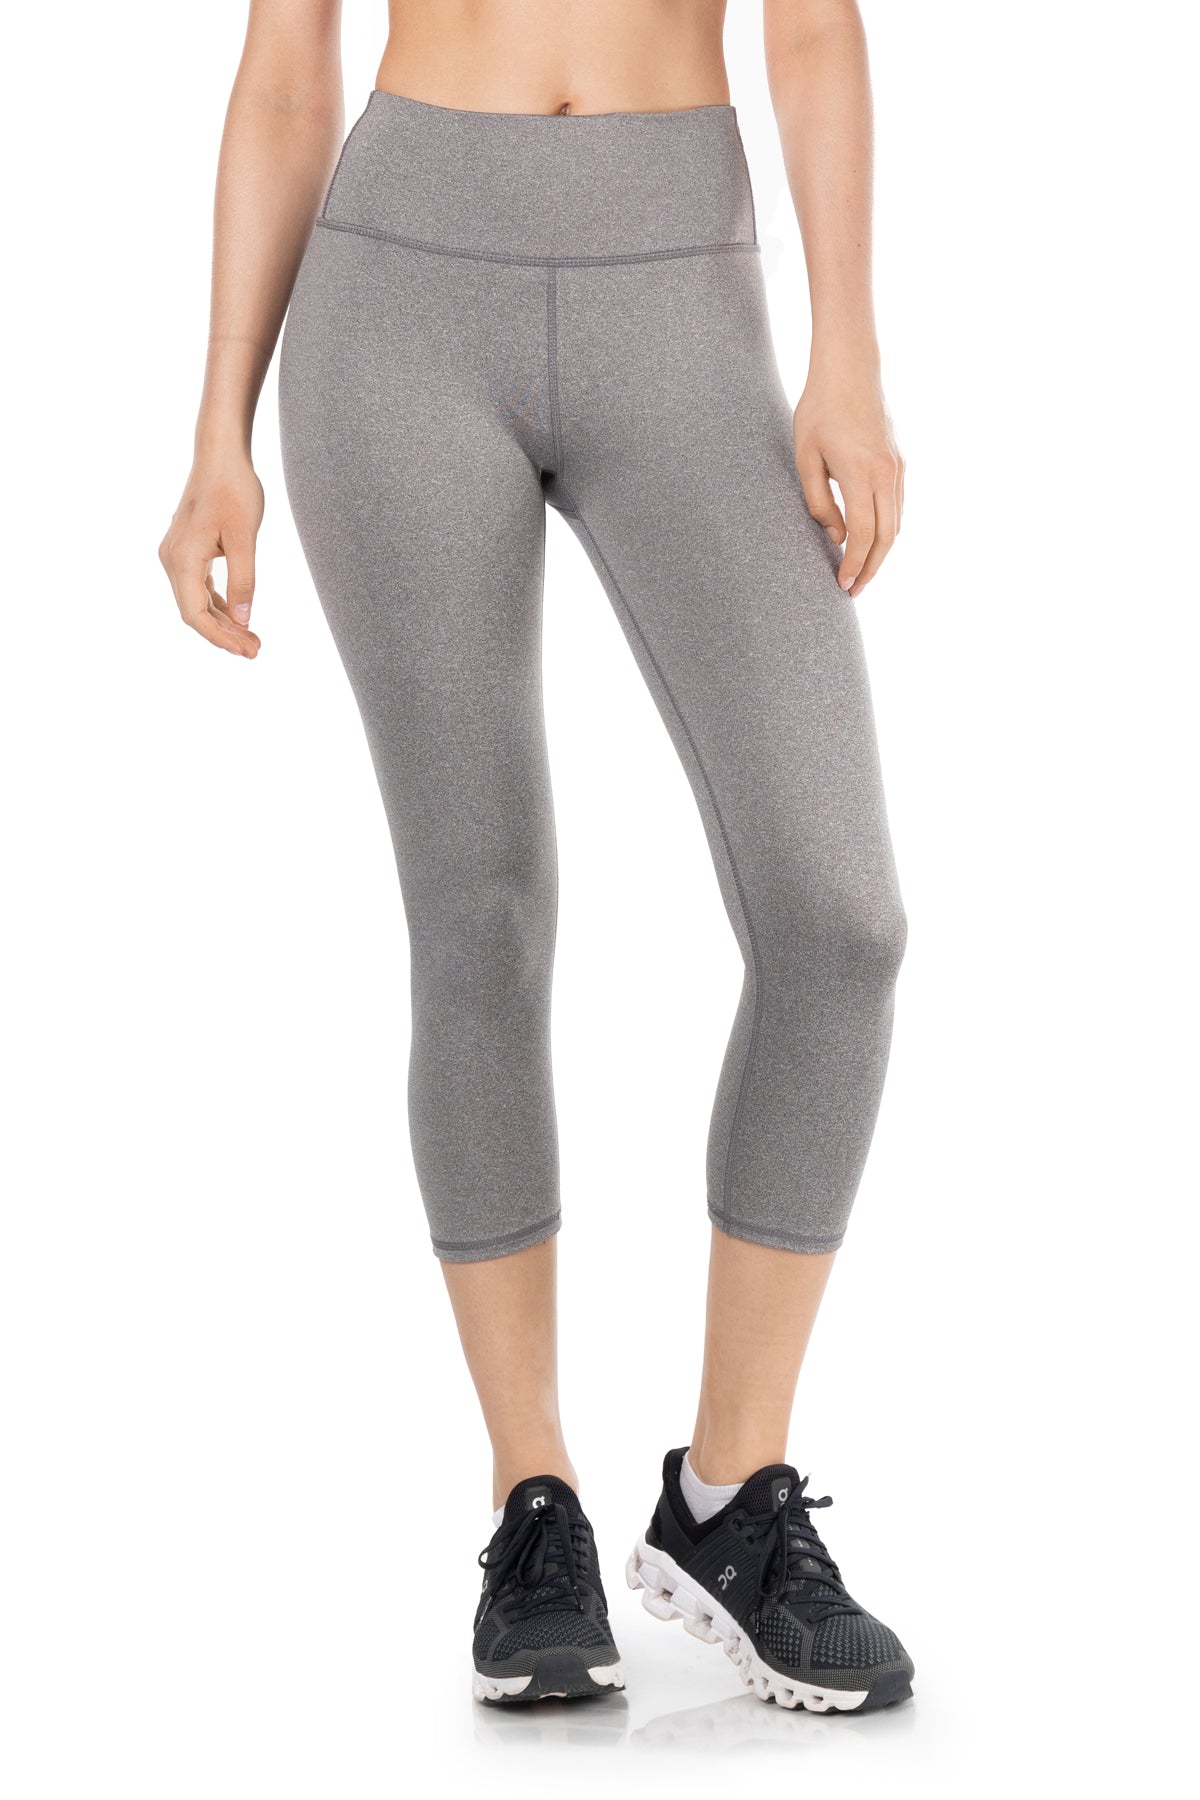 Cotton Yoga Pant - Grey Melange  Grey yoga pants, Cotton yoga pants, Yoga  pants